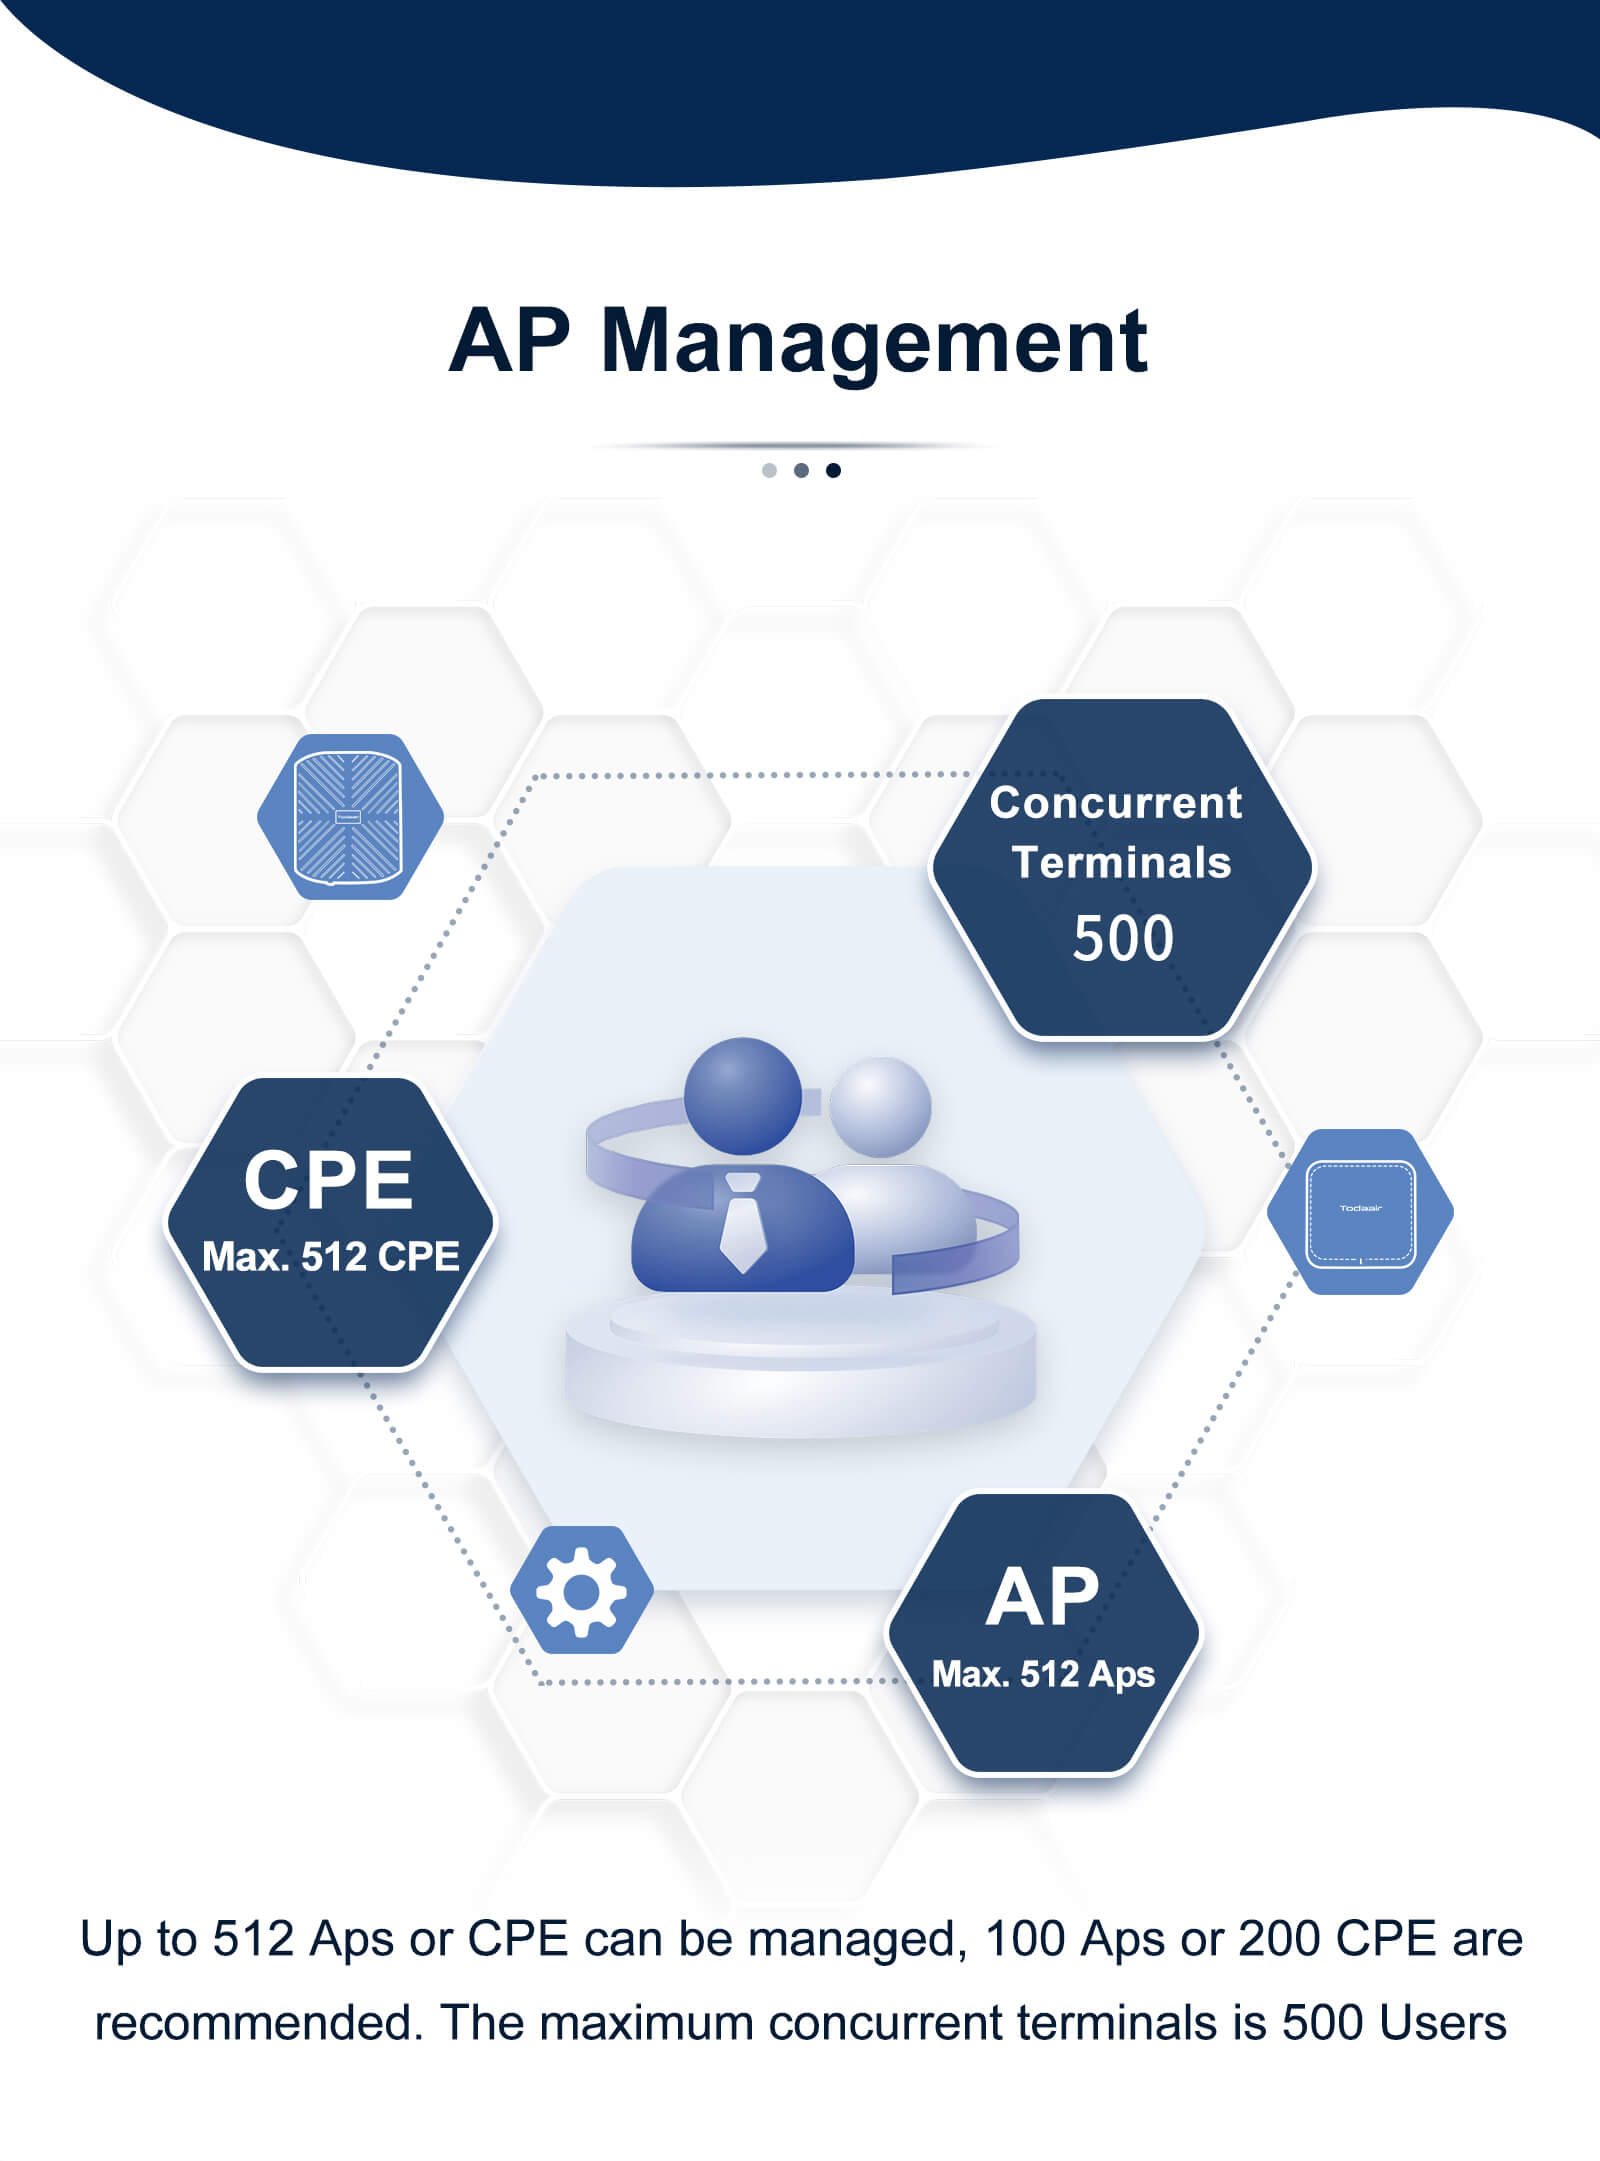 Todaair APP management access controller